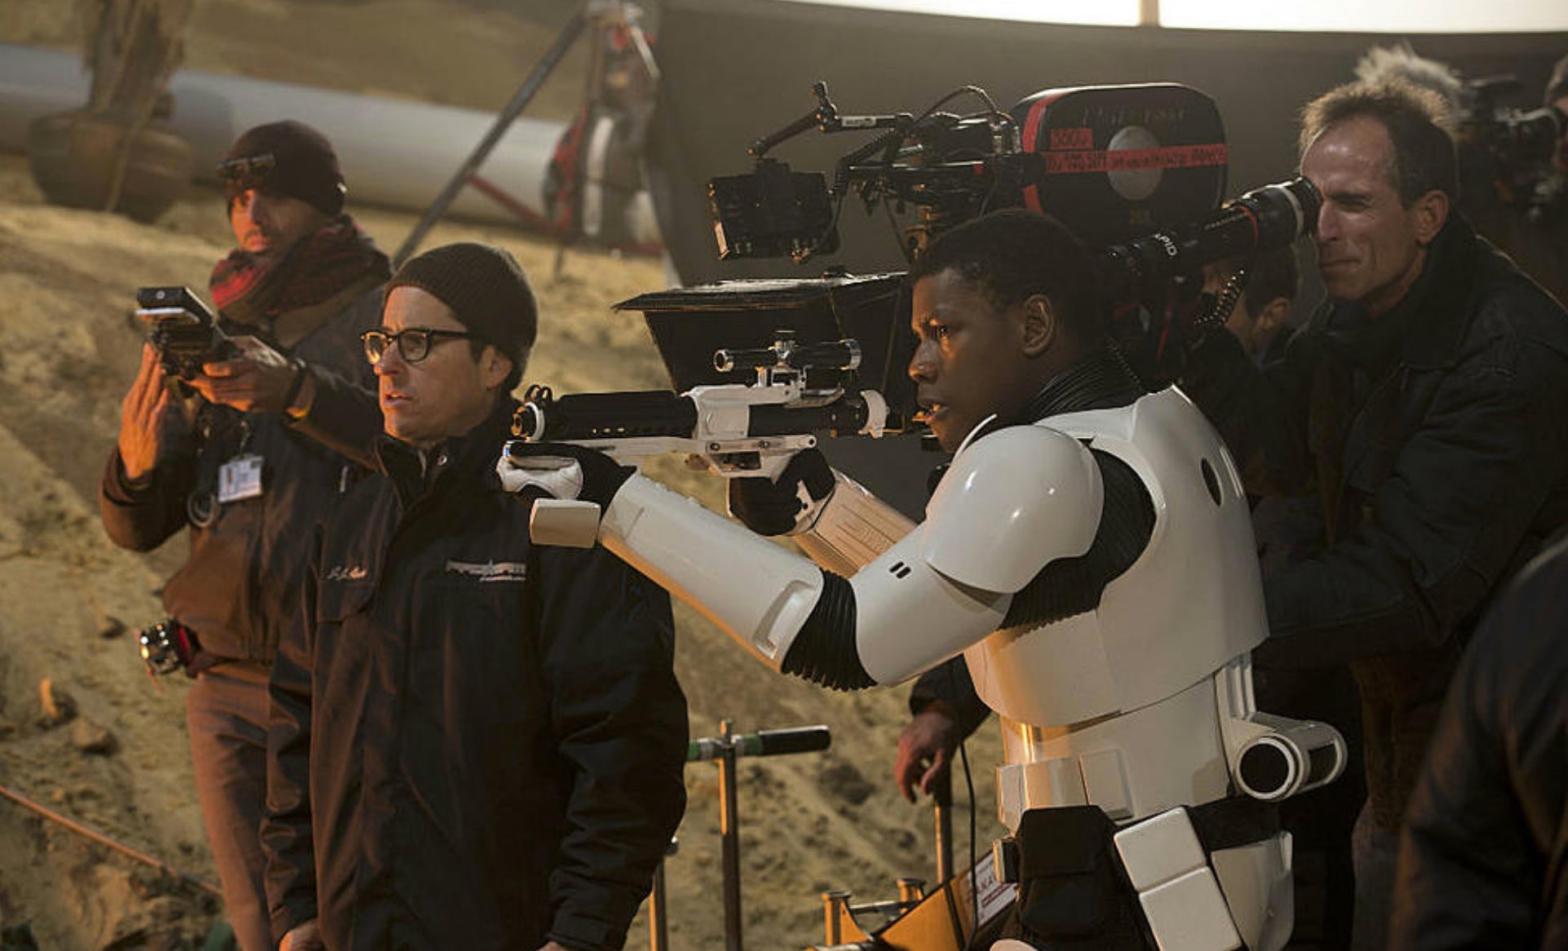 J.J. Abrams directing Star Wars: The Force Awakens. (Image: Lucasfilm)